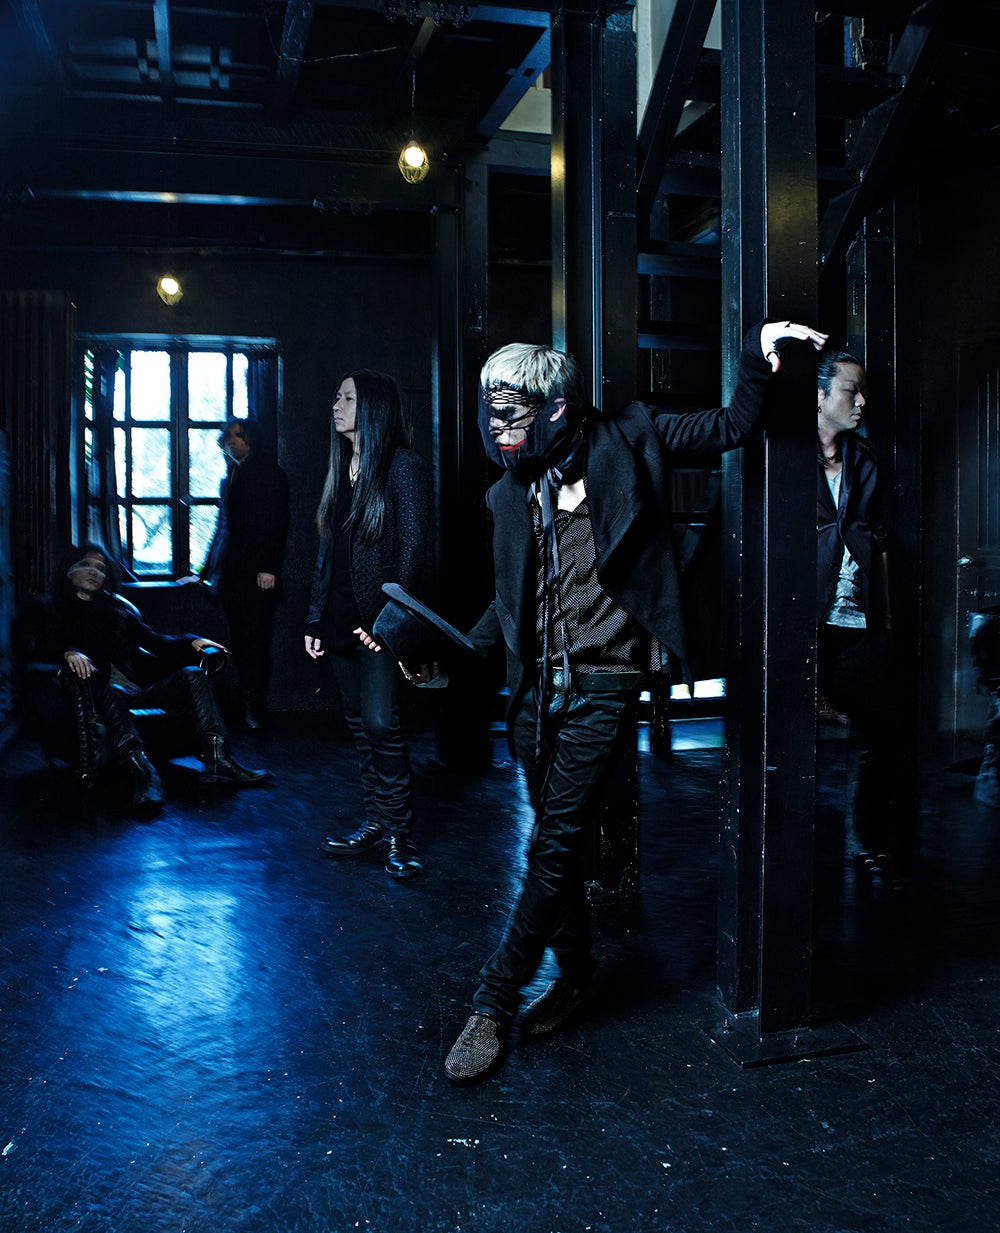 Dir En Greyのヴォーカル京の新プロジェクトバンド Sukekiyo 最新アルバム全曲試聴スタート モデルプレス